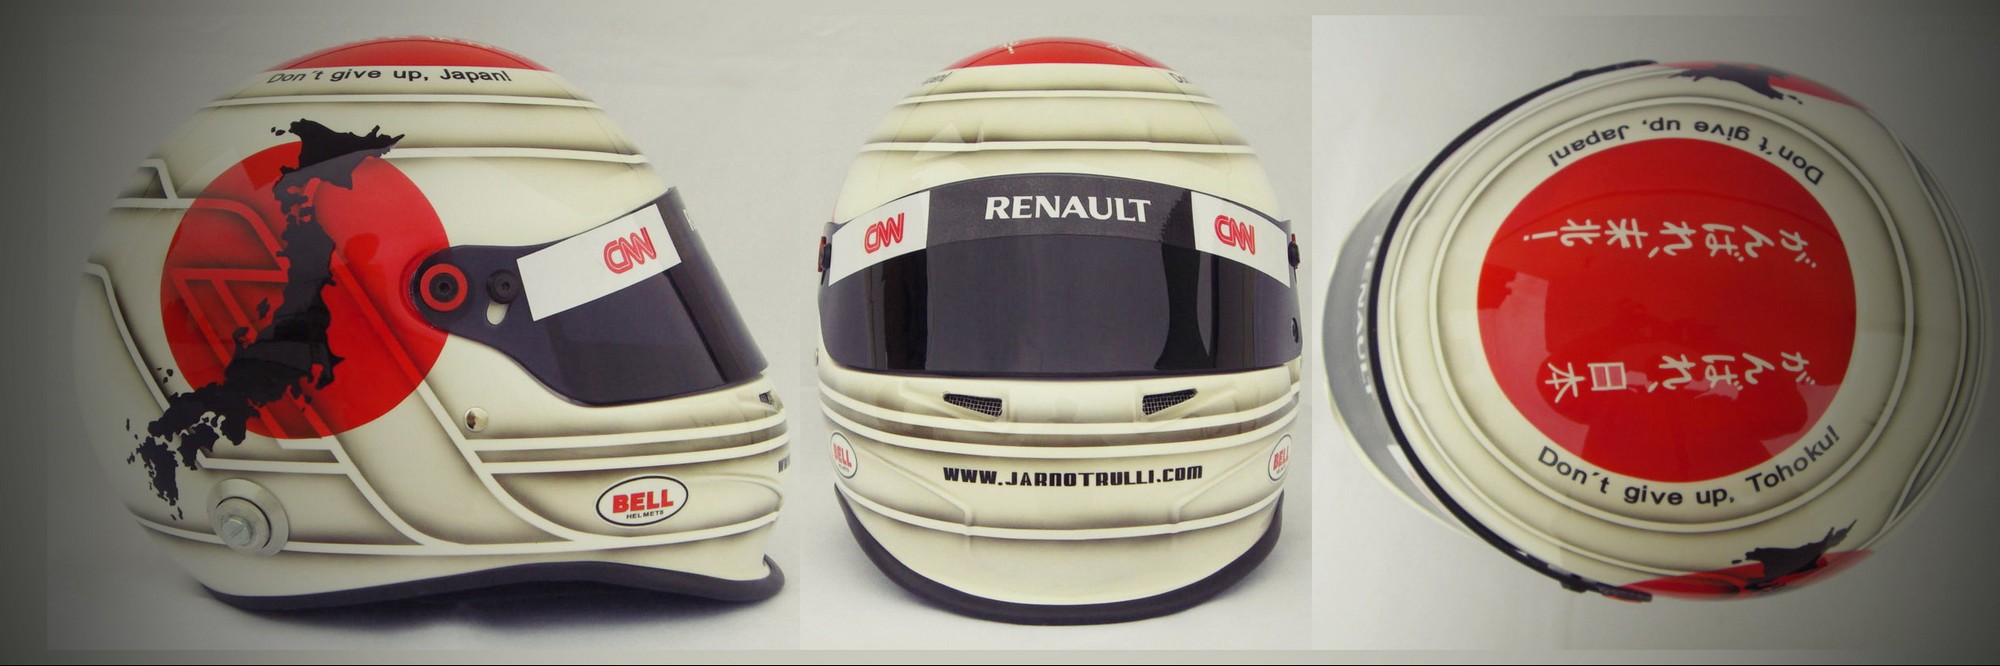 Шлем Ярно Трулли на Гран-При Австралии 2011 года | 2011 Australian Grand Prix helmet of Jarno Trulli